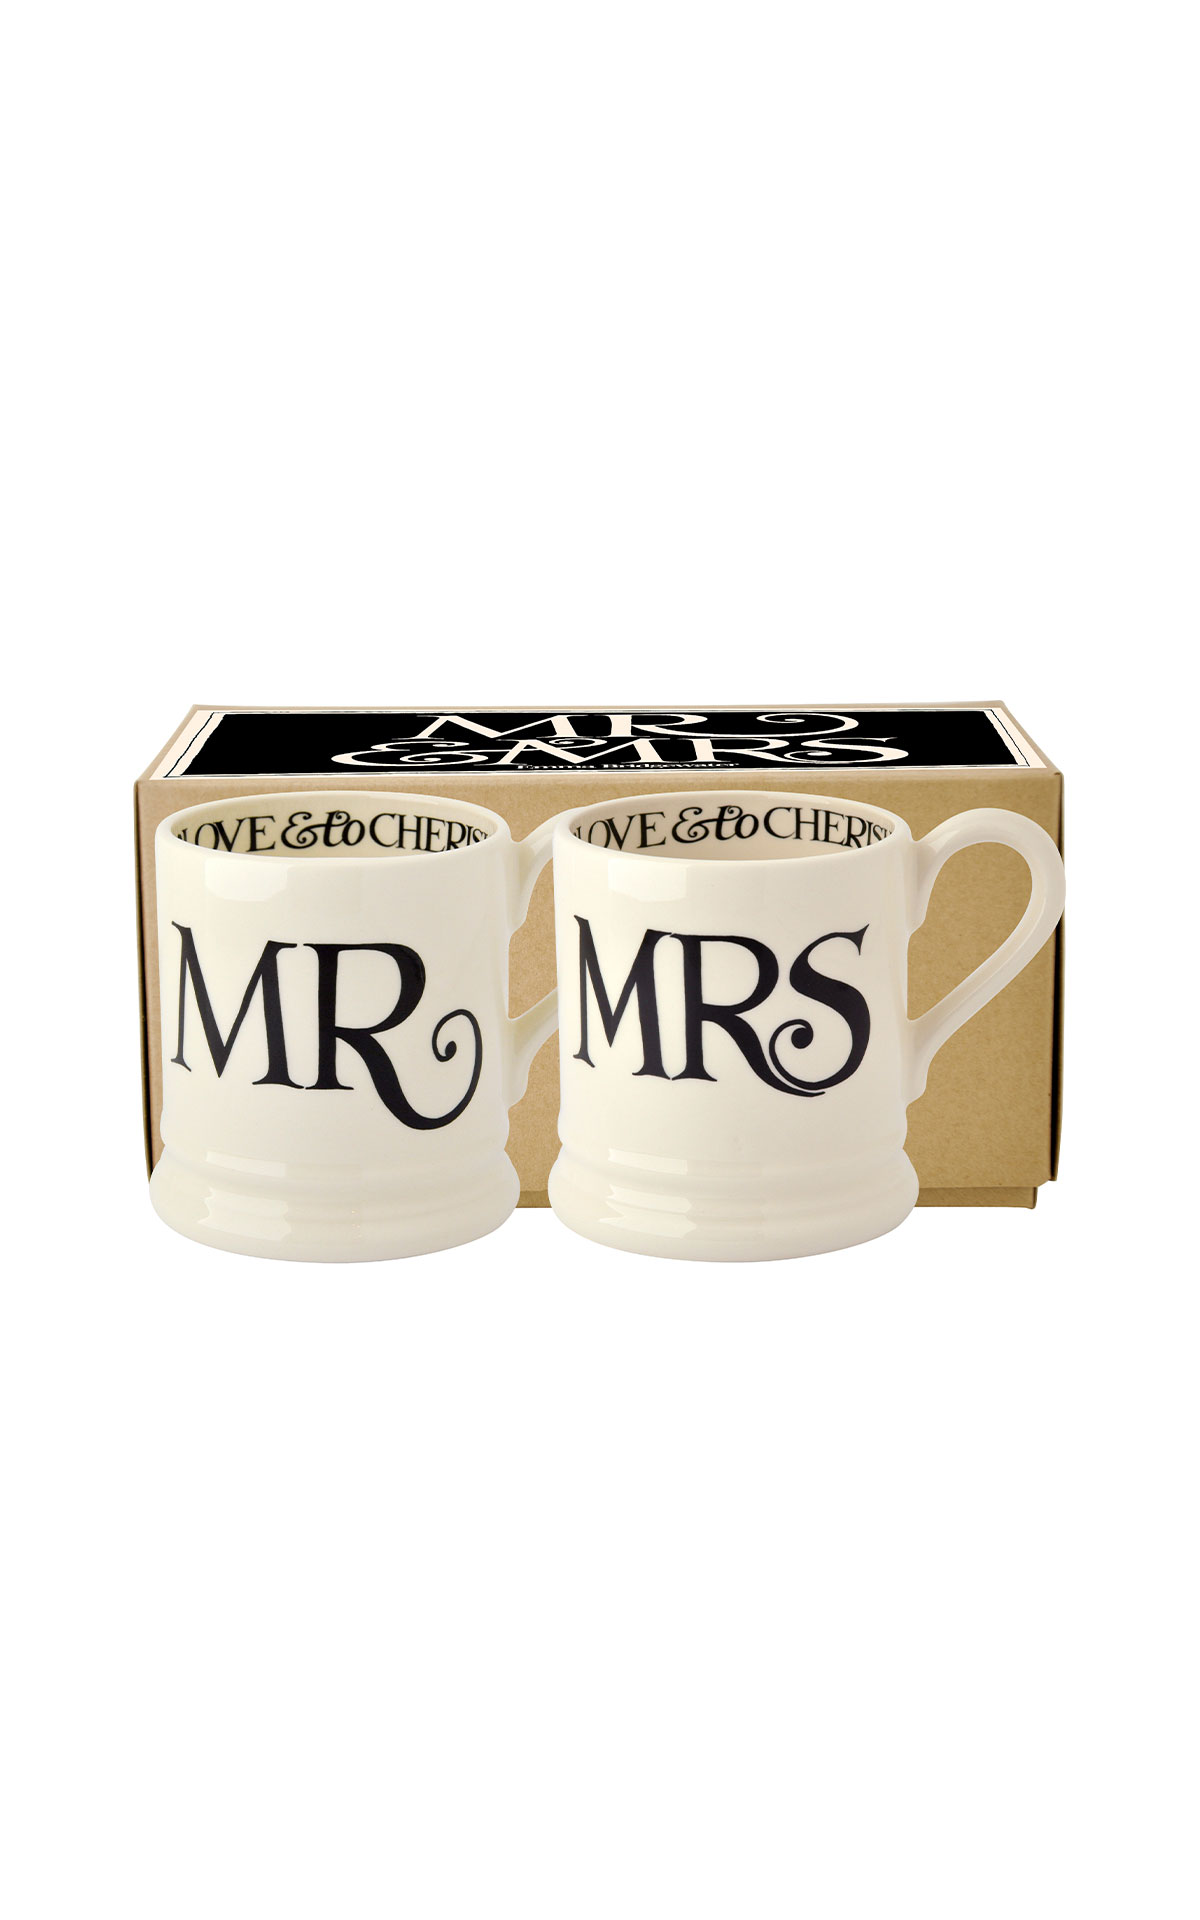 Emma Bridgewater Black toast Mr & Mrs set of two half pint mugs from Bicester Village